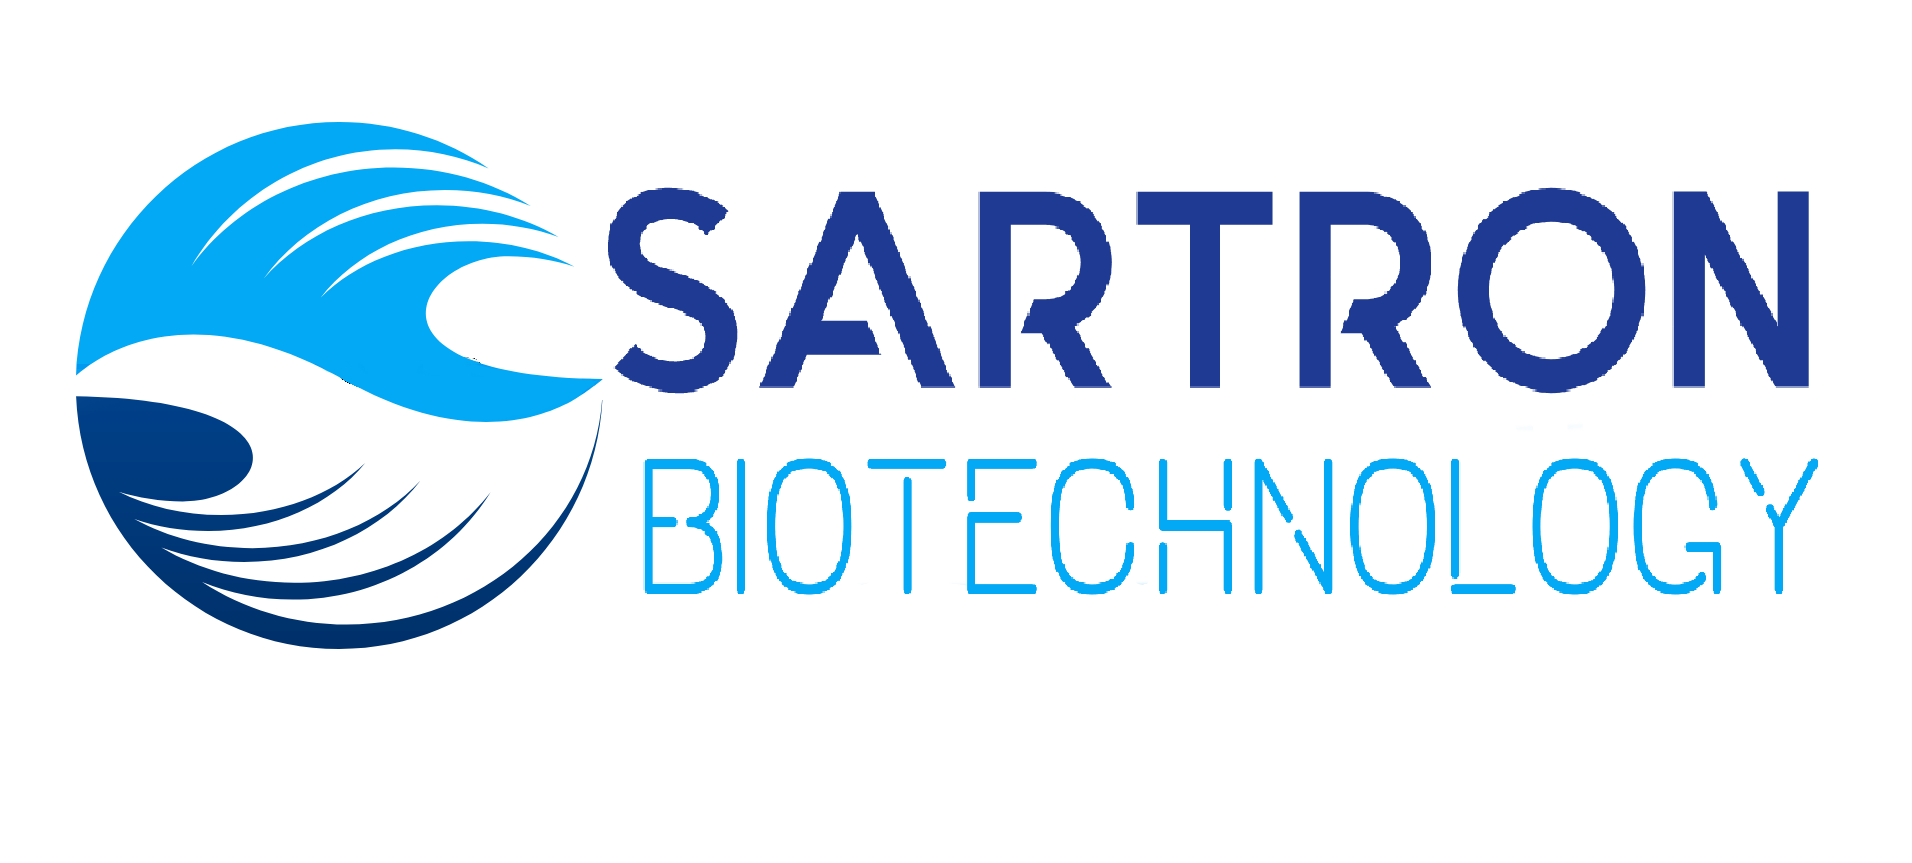 Sartron Biotechnology